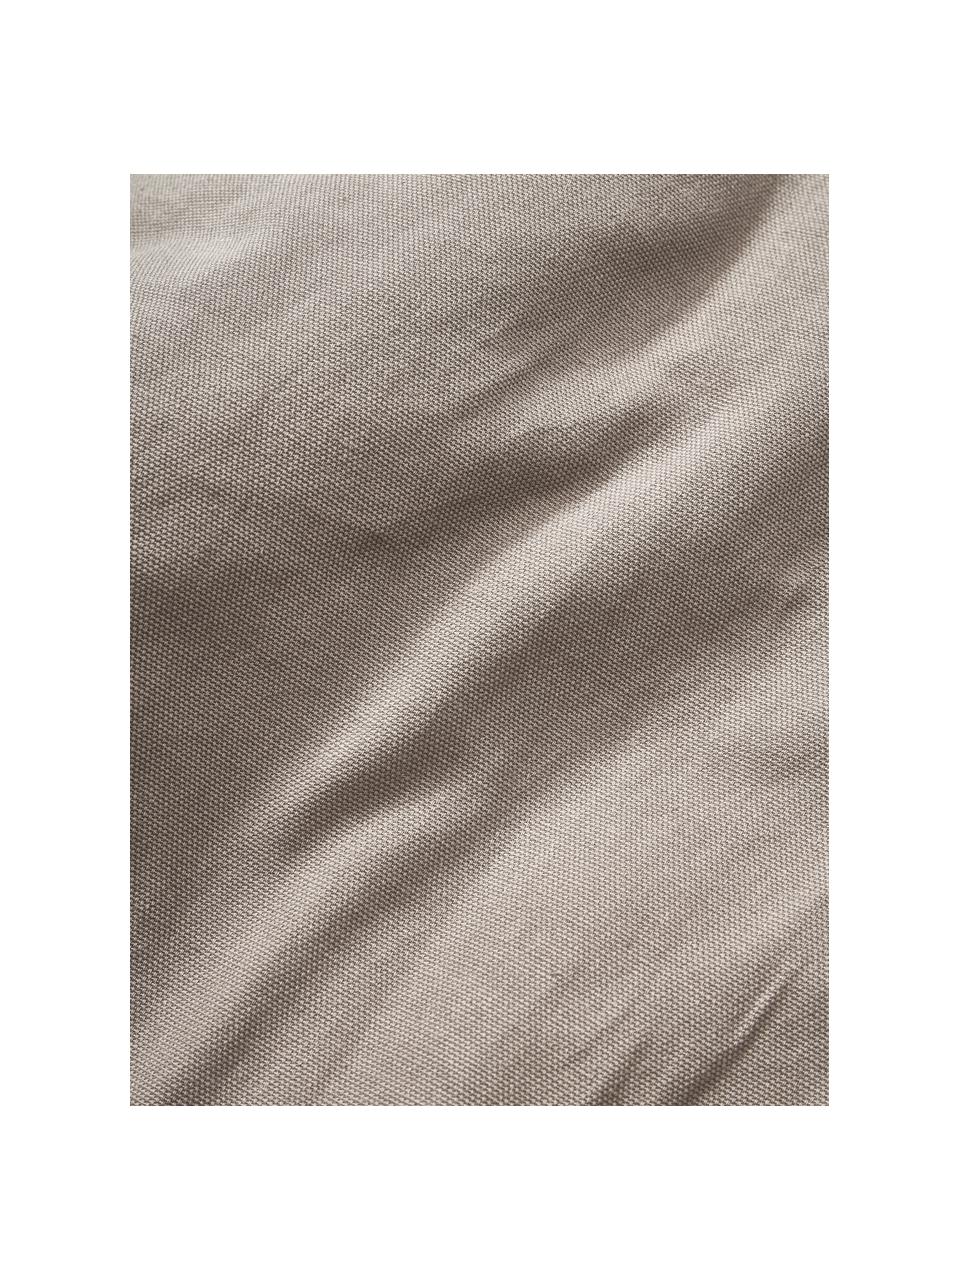 Funda de cojín con tejido capitoné y flecos Inga, 100% algodón, Gris, blanco crema, An 45 x L 45 cm